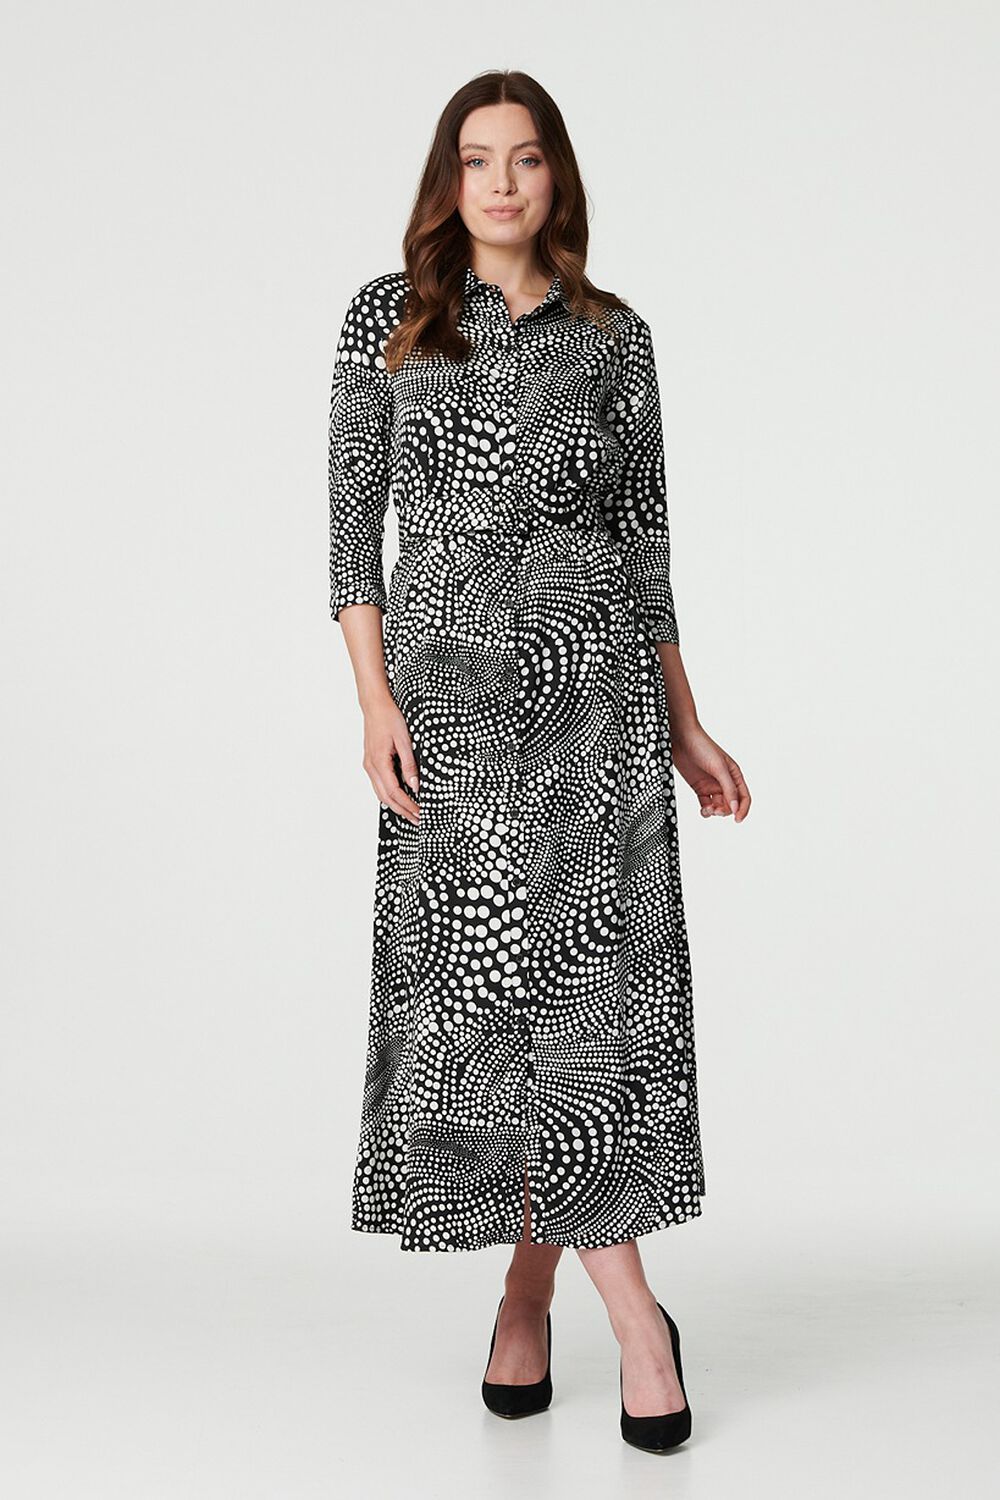 Izabel London Black - Dotty Print 3/4 Sleeve Shirt Dress, Size: 12